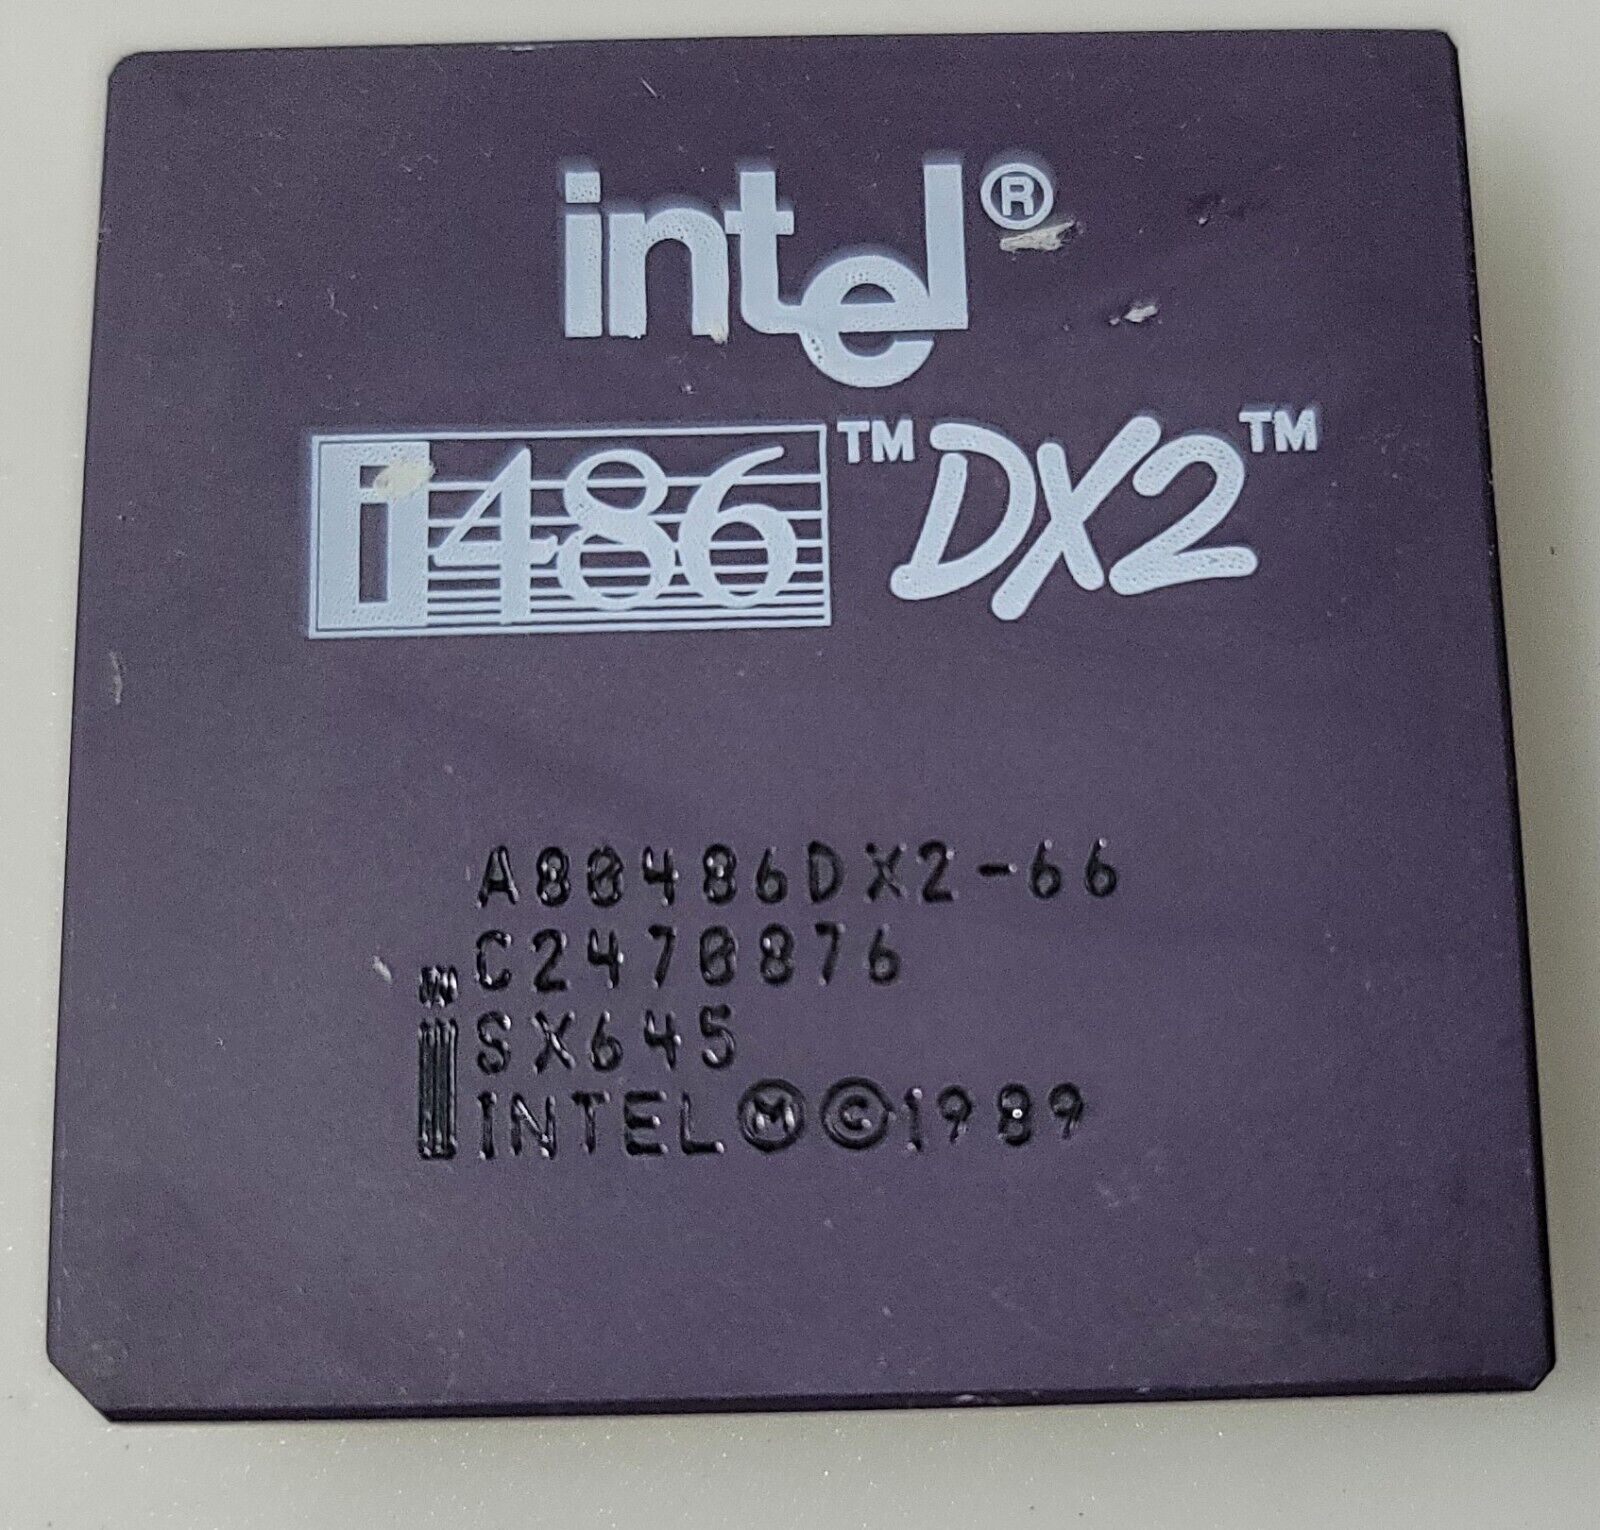 Vintage Rare Intel i486 DX2 A80486DX2-66 SX645 Processor Collection/Gold